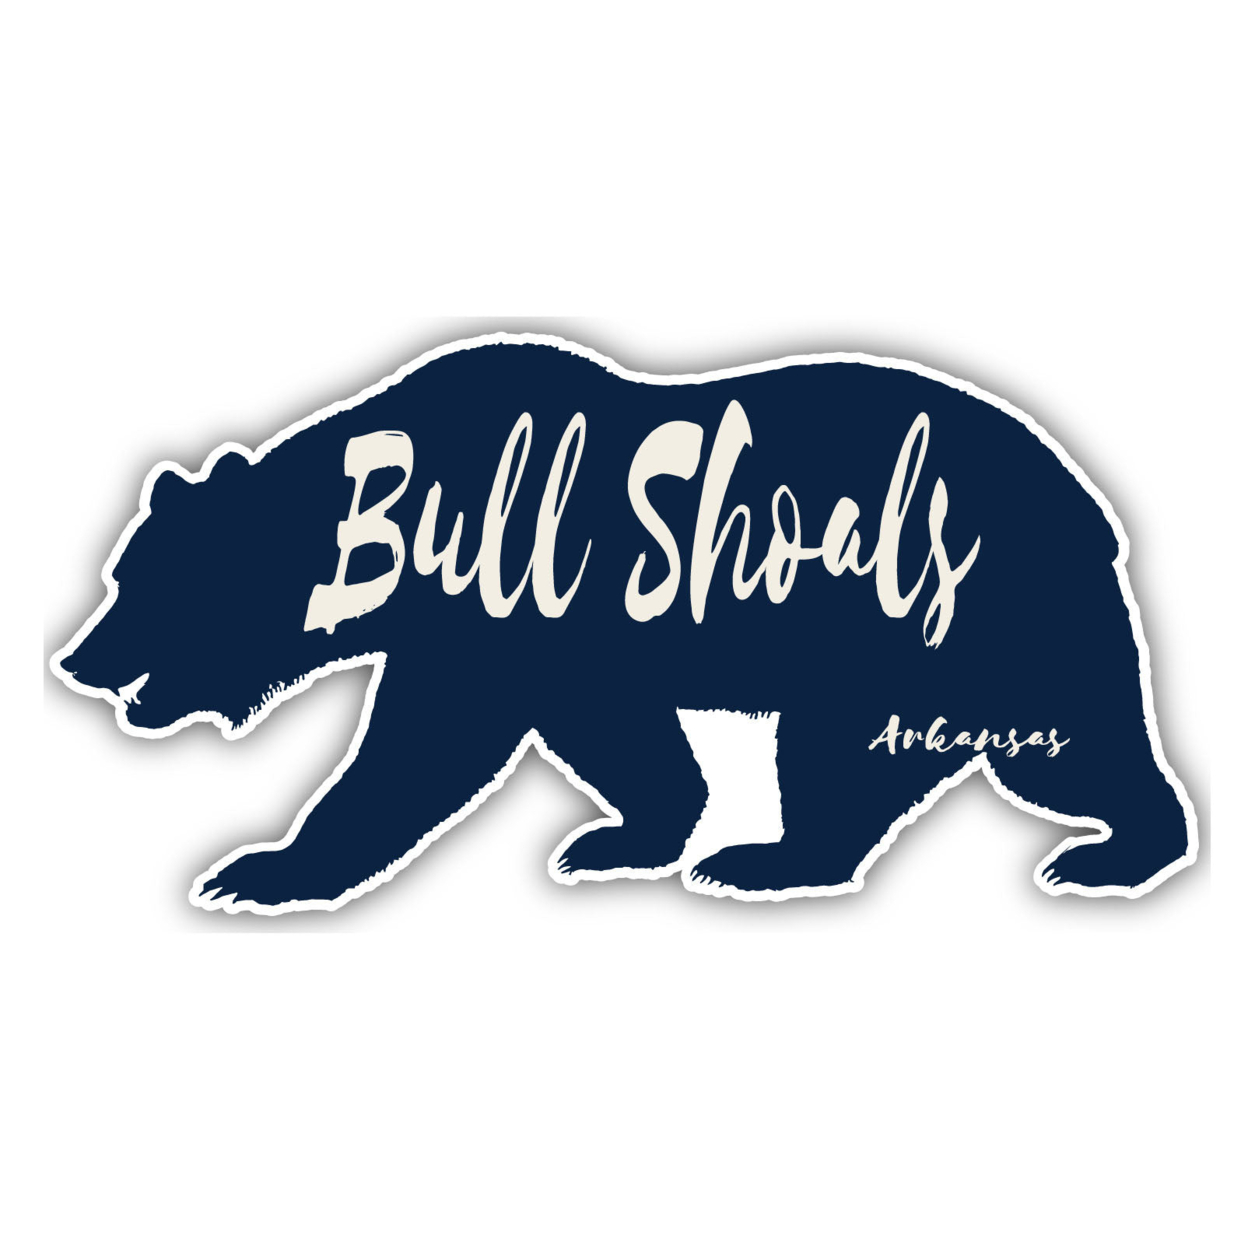 Bull Shoals Arkansas Souvenir Decorative Stickers (Choose Theme And Size) - Single Unit, 6-Inch, Adventures Awaits